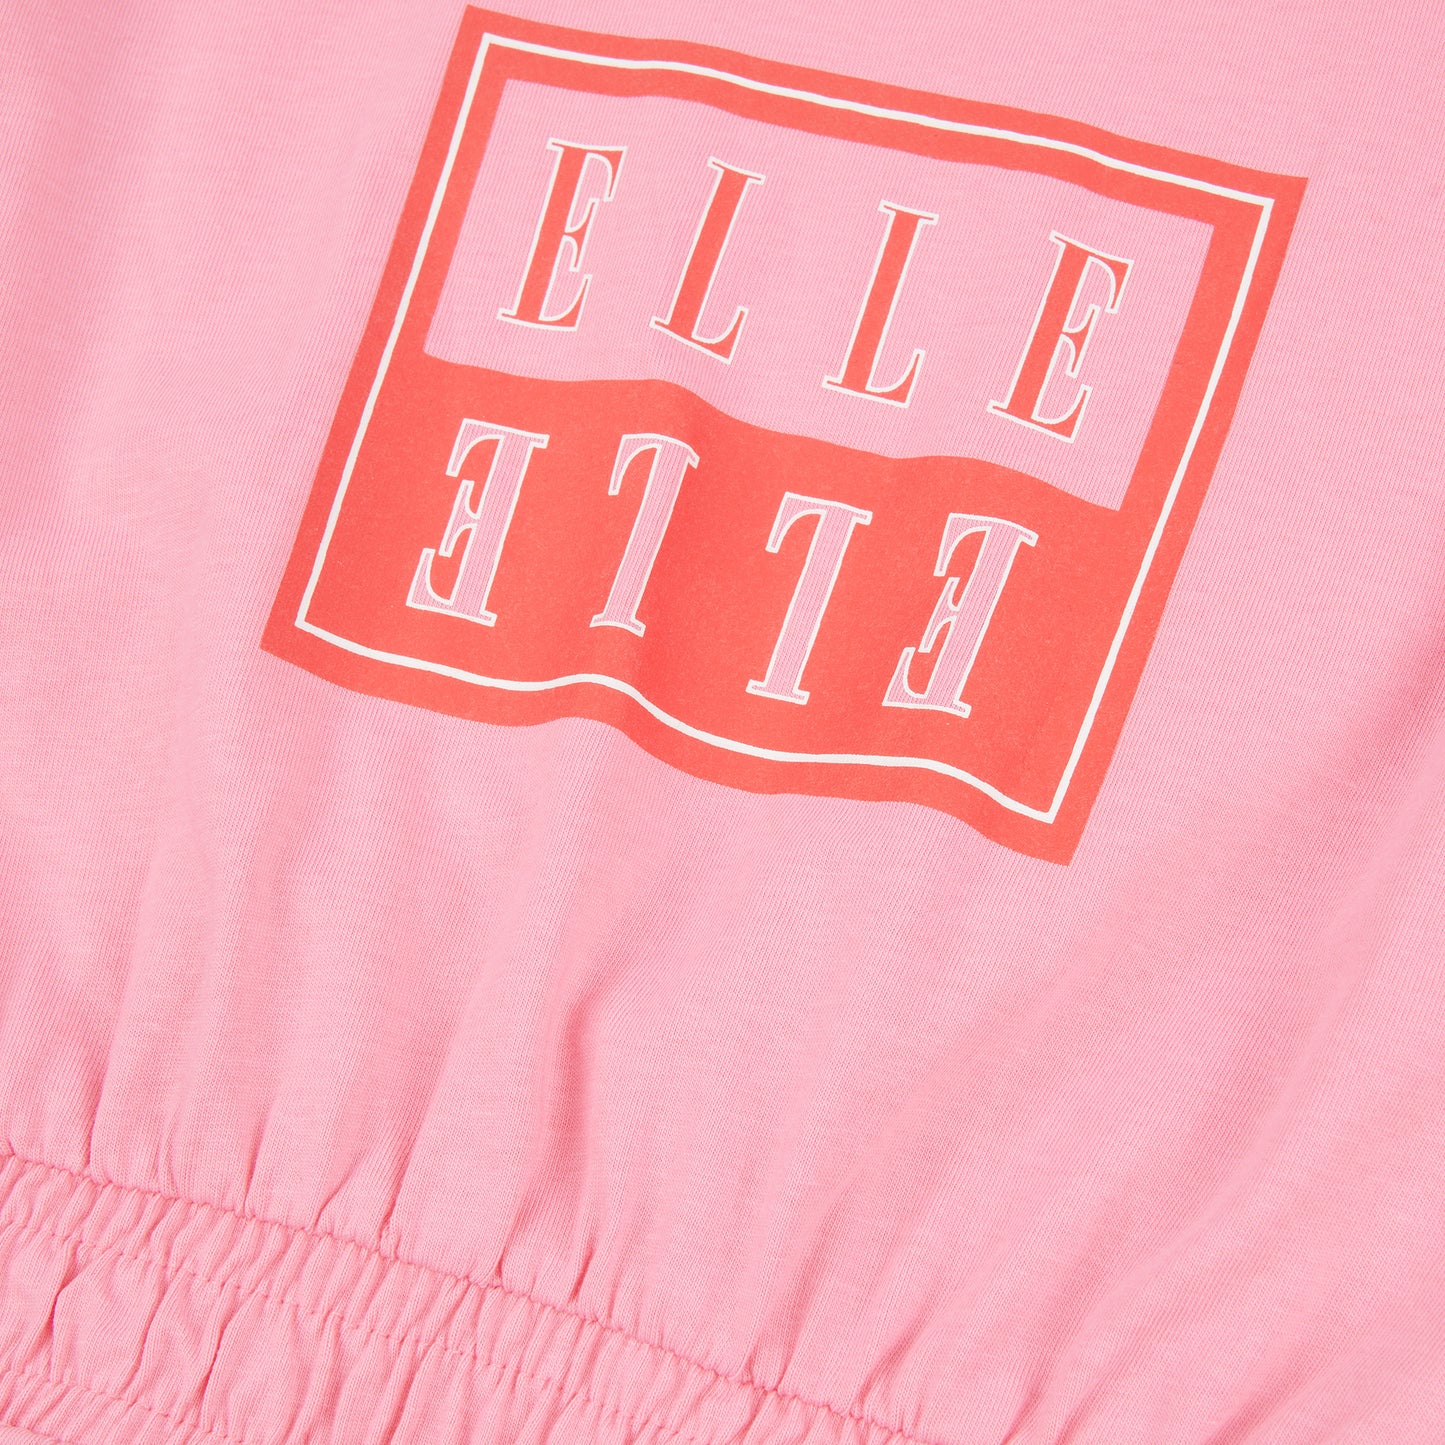 ELLE Girls Plumeria Pink Block Logo Dress